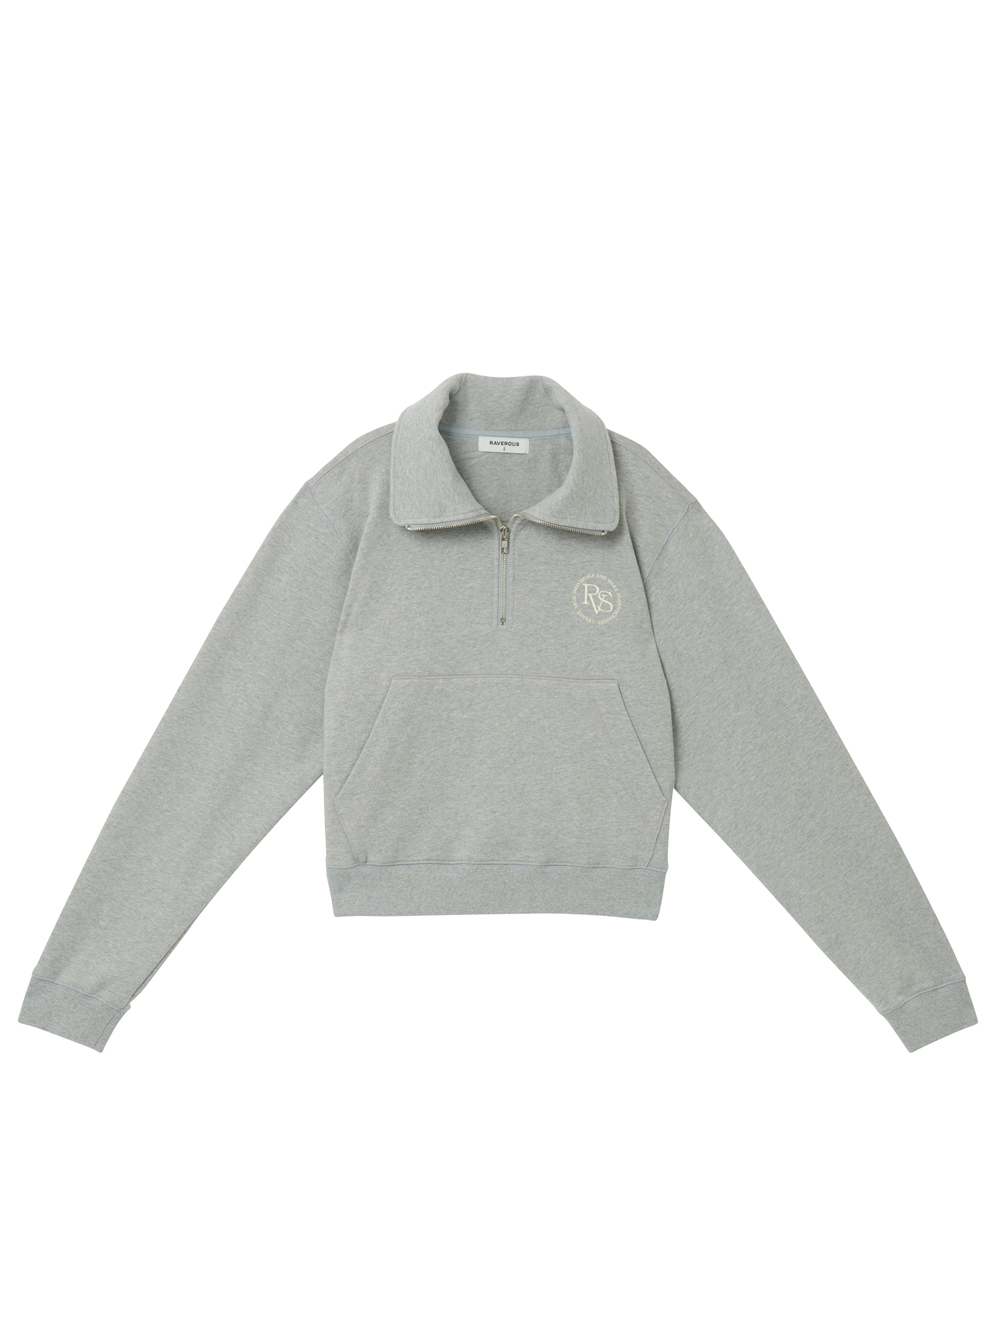 RVS High Neck Collar Sweatshirt Melange Grey